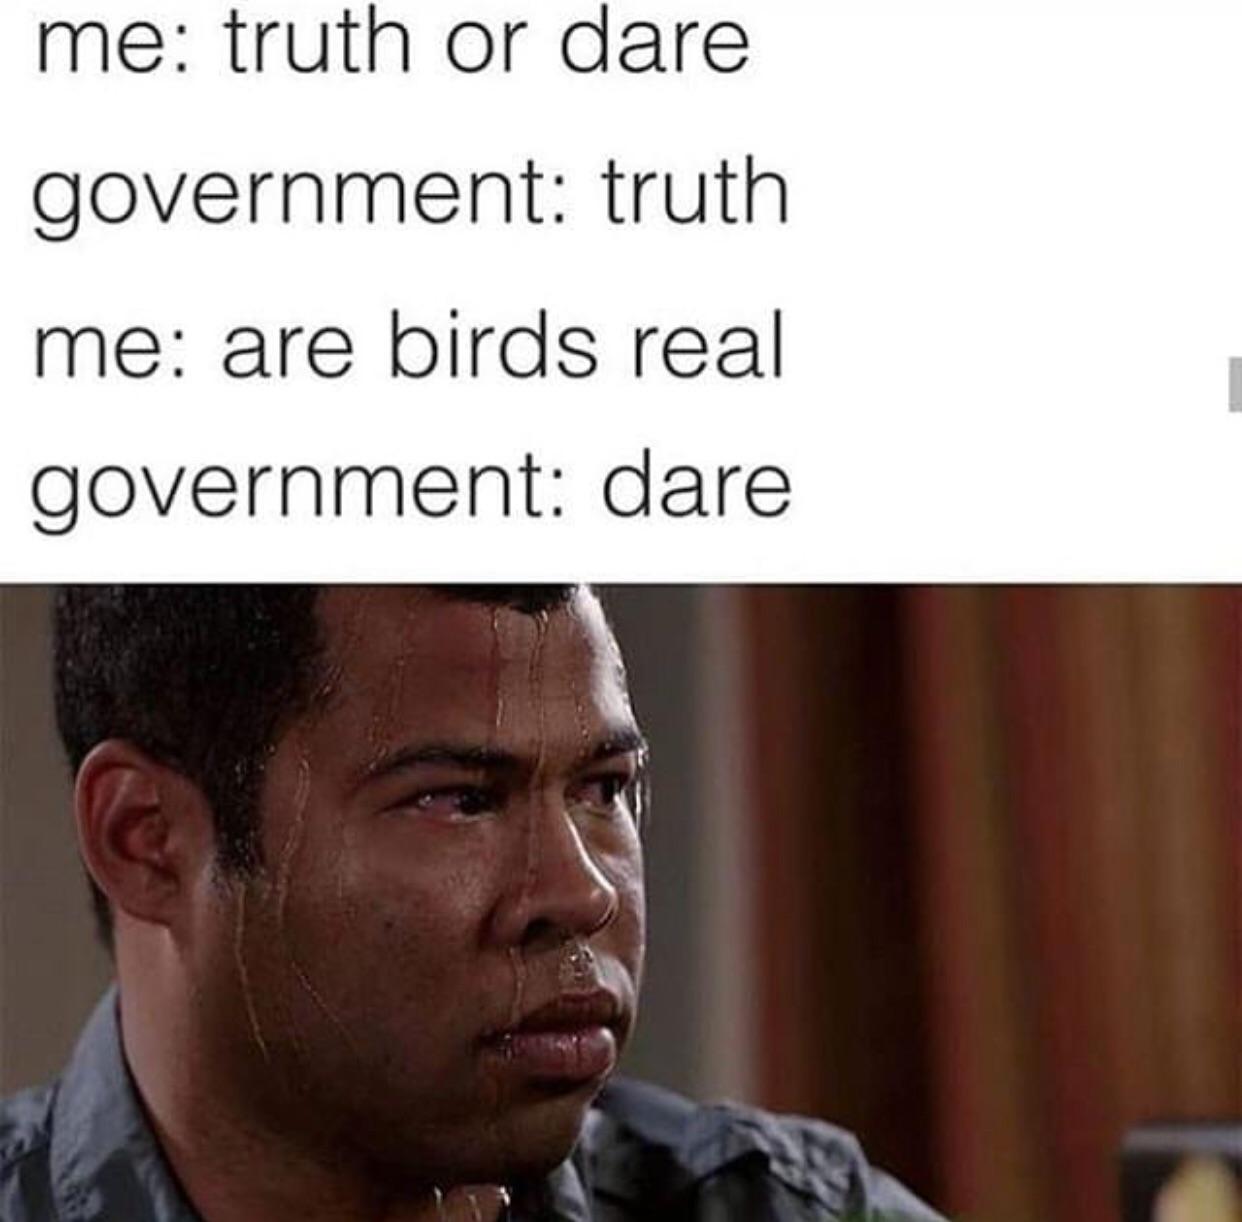 dank meme - truth or dare memes - me truth or dare government truth me are birds real government dare